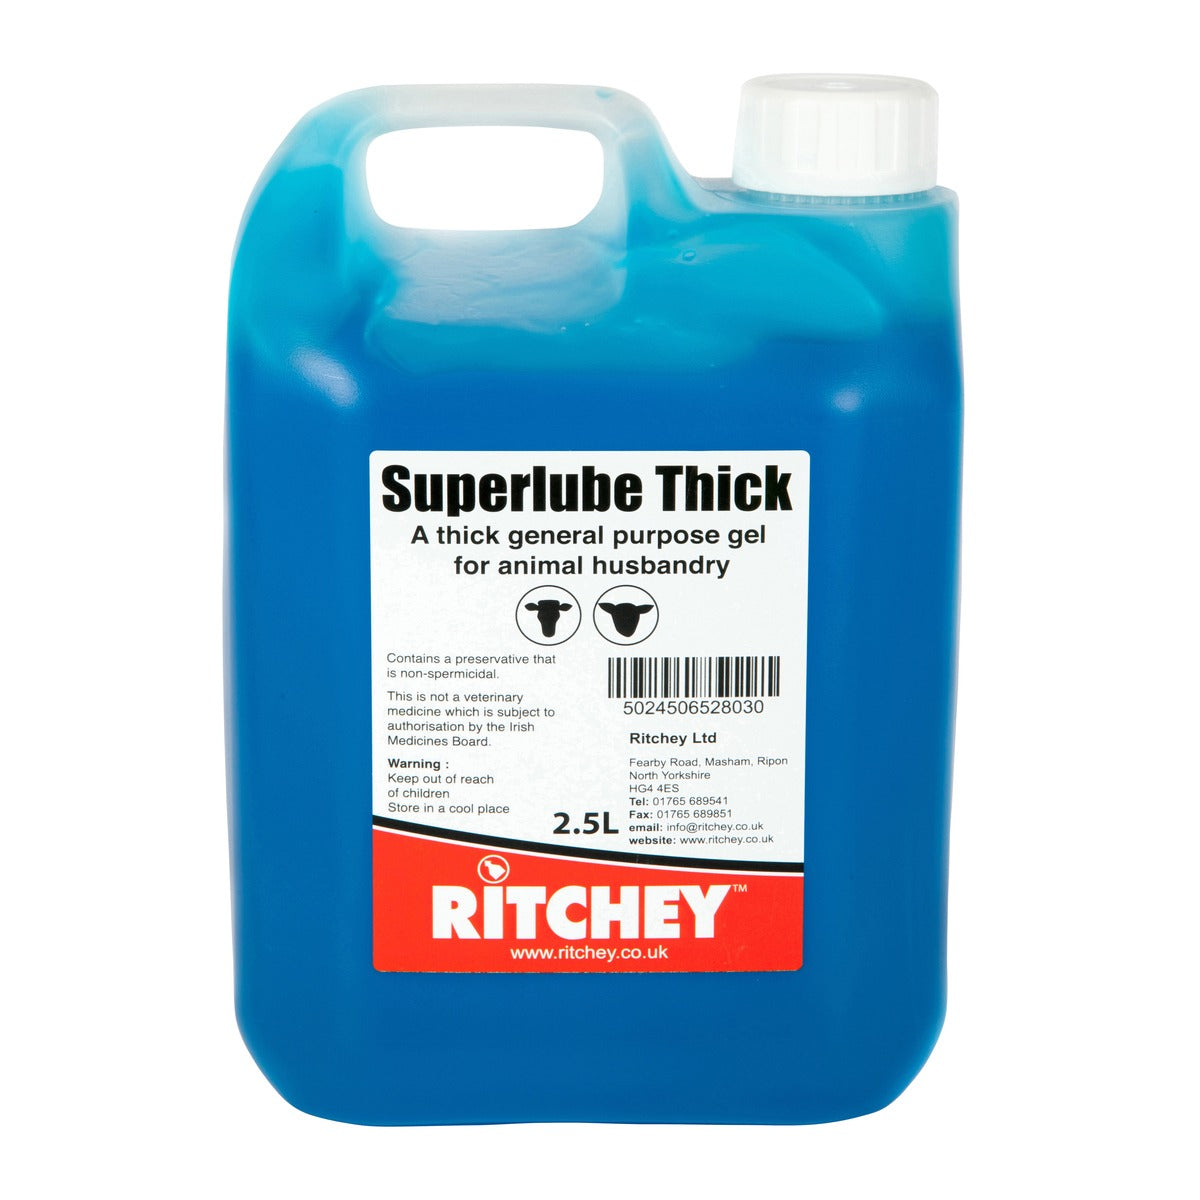 Ritchie Superlube animal farmacy